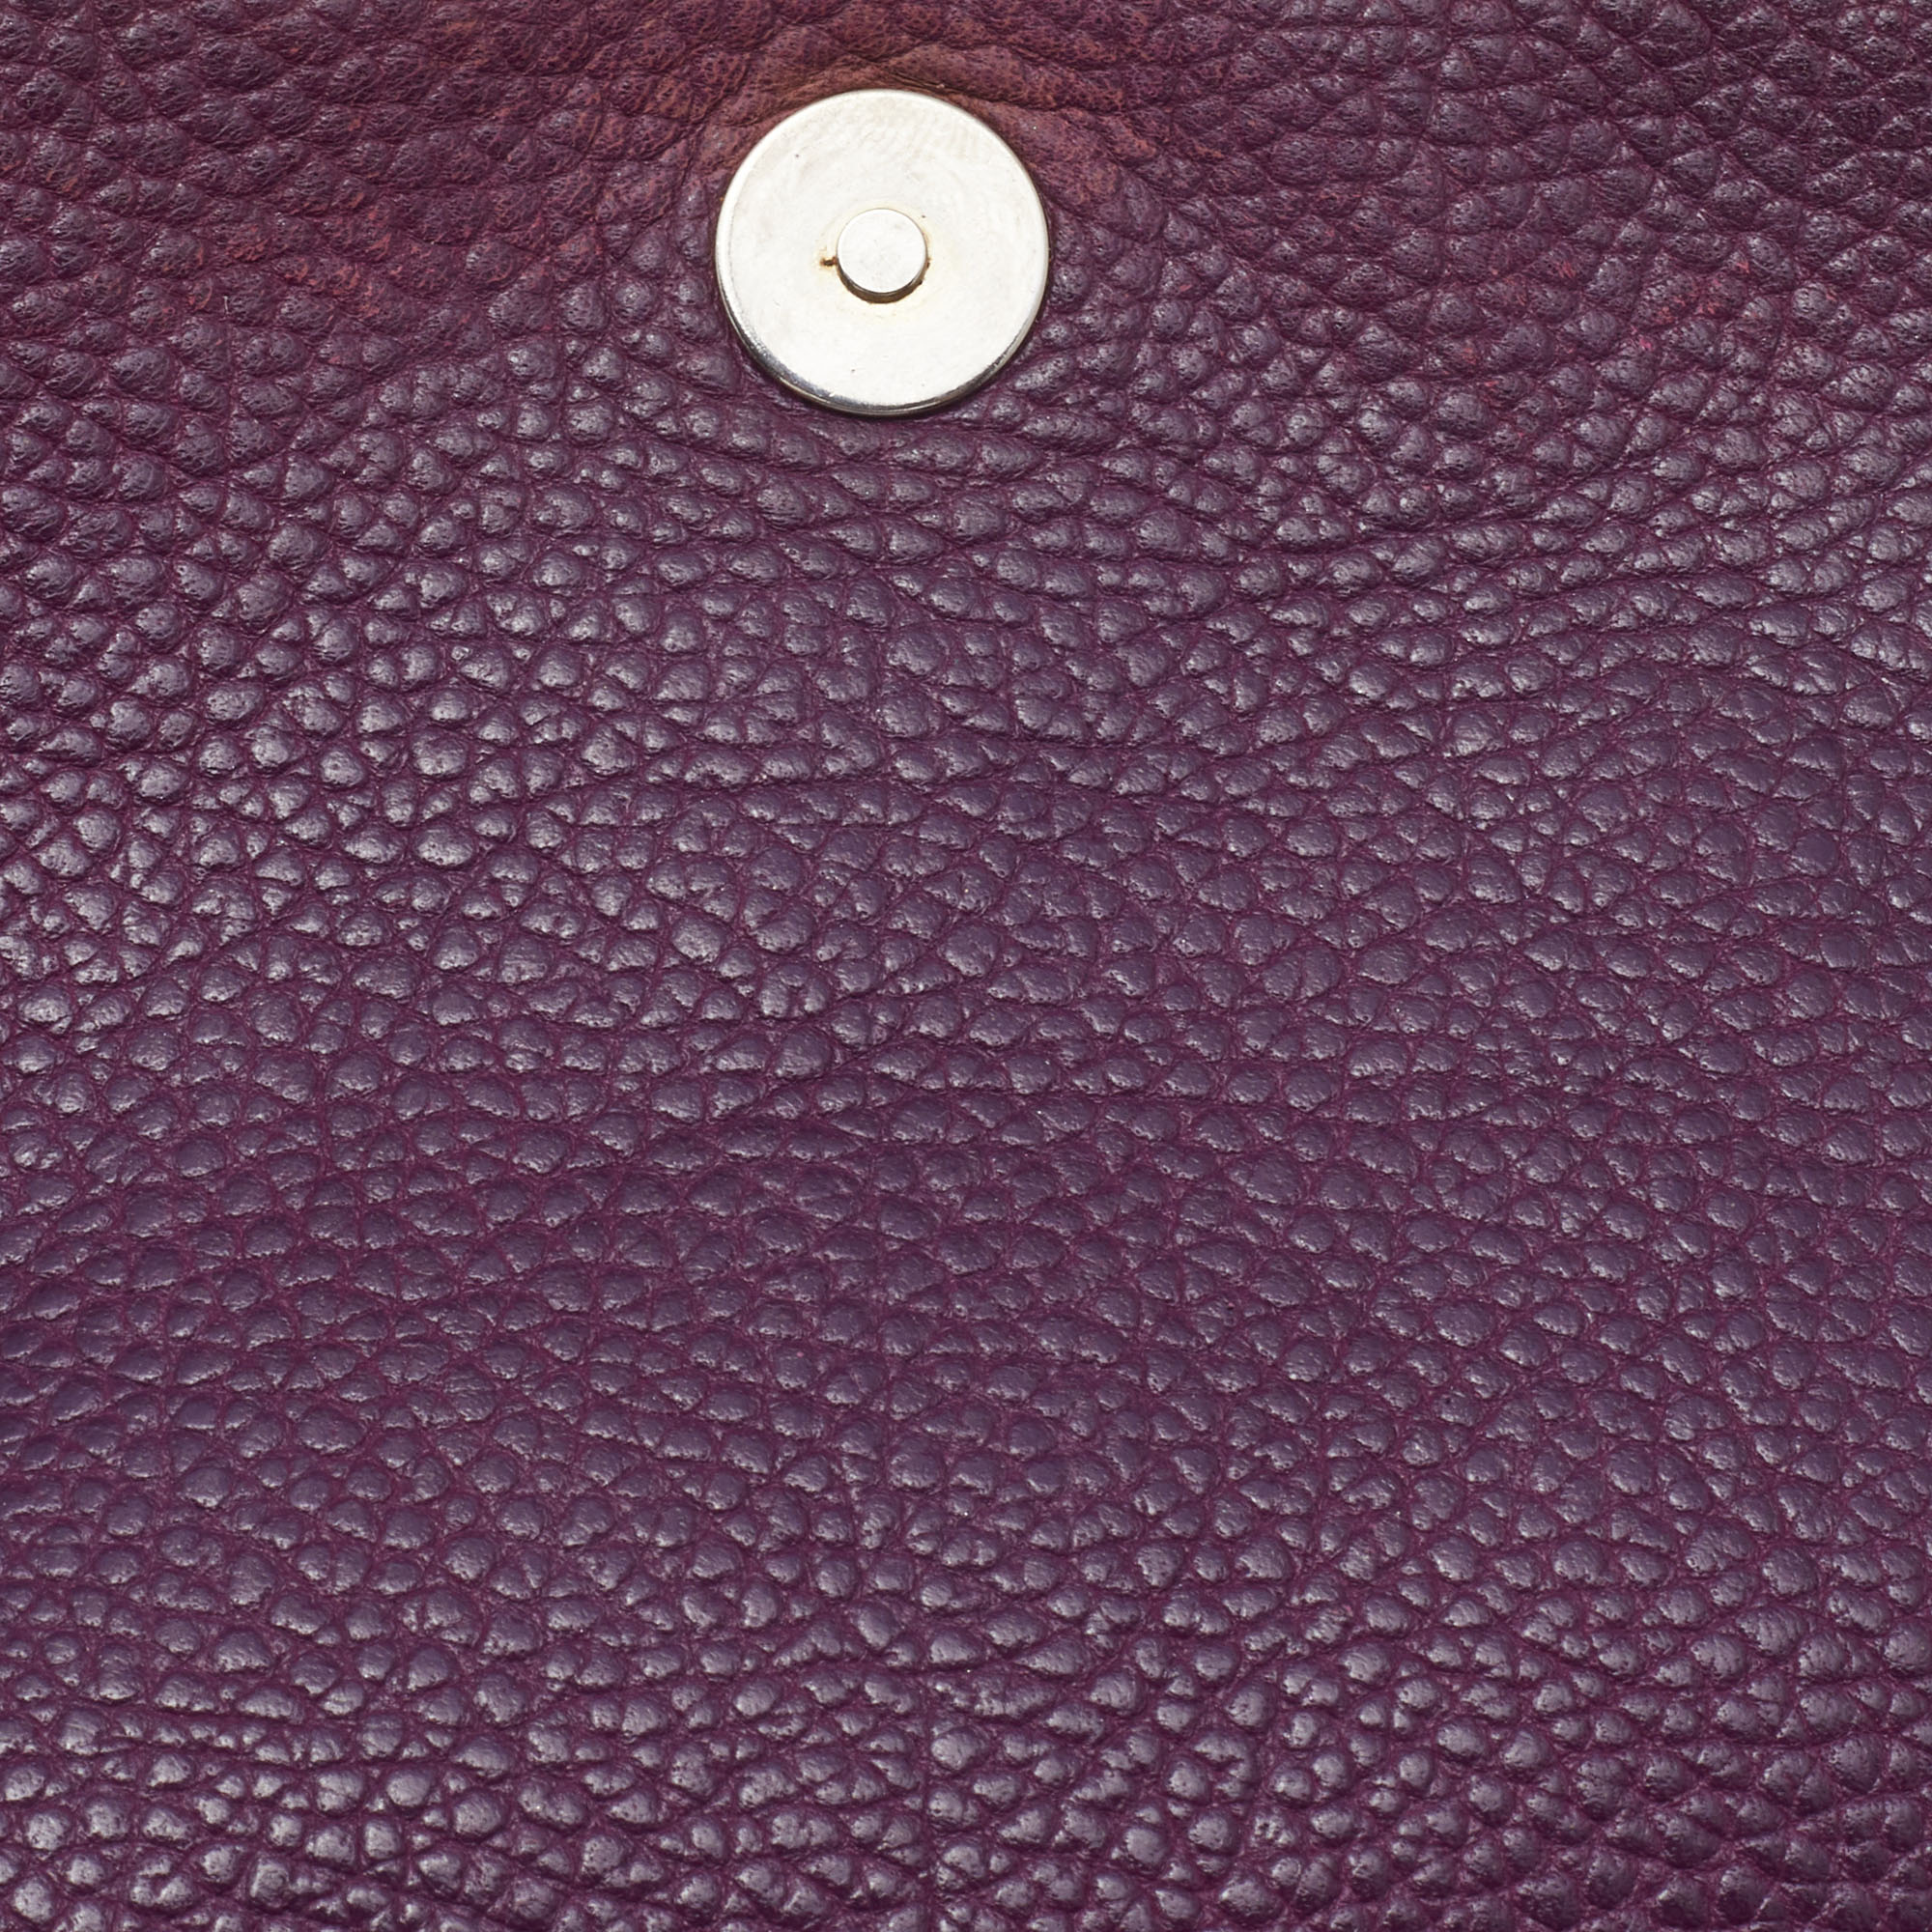 CH Carolina Herrera Purple Leather Chain Flap Shoulder Bag